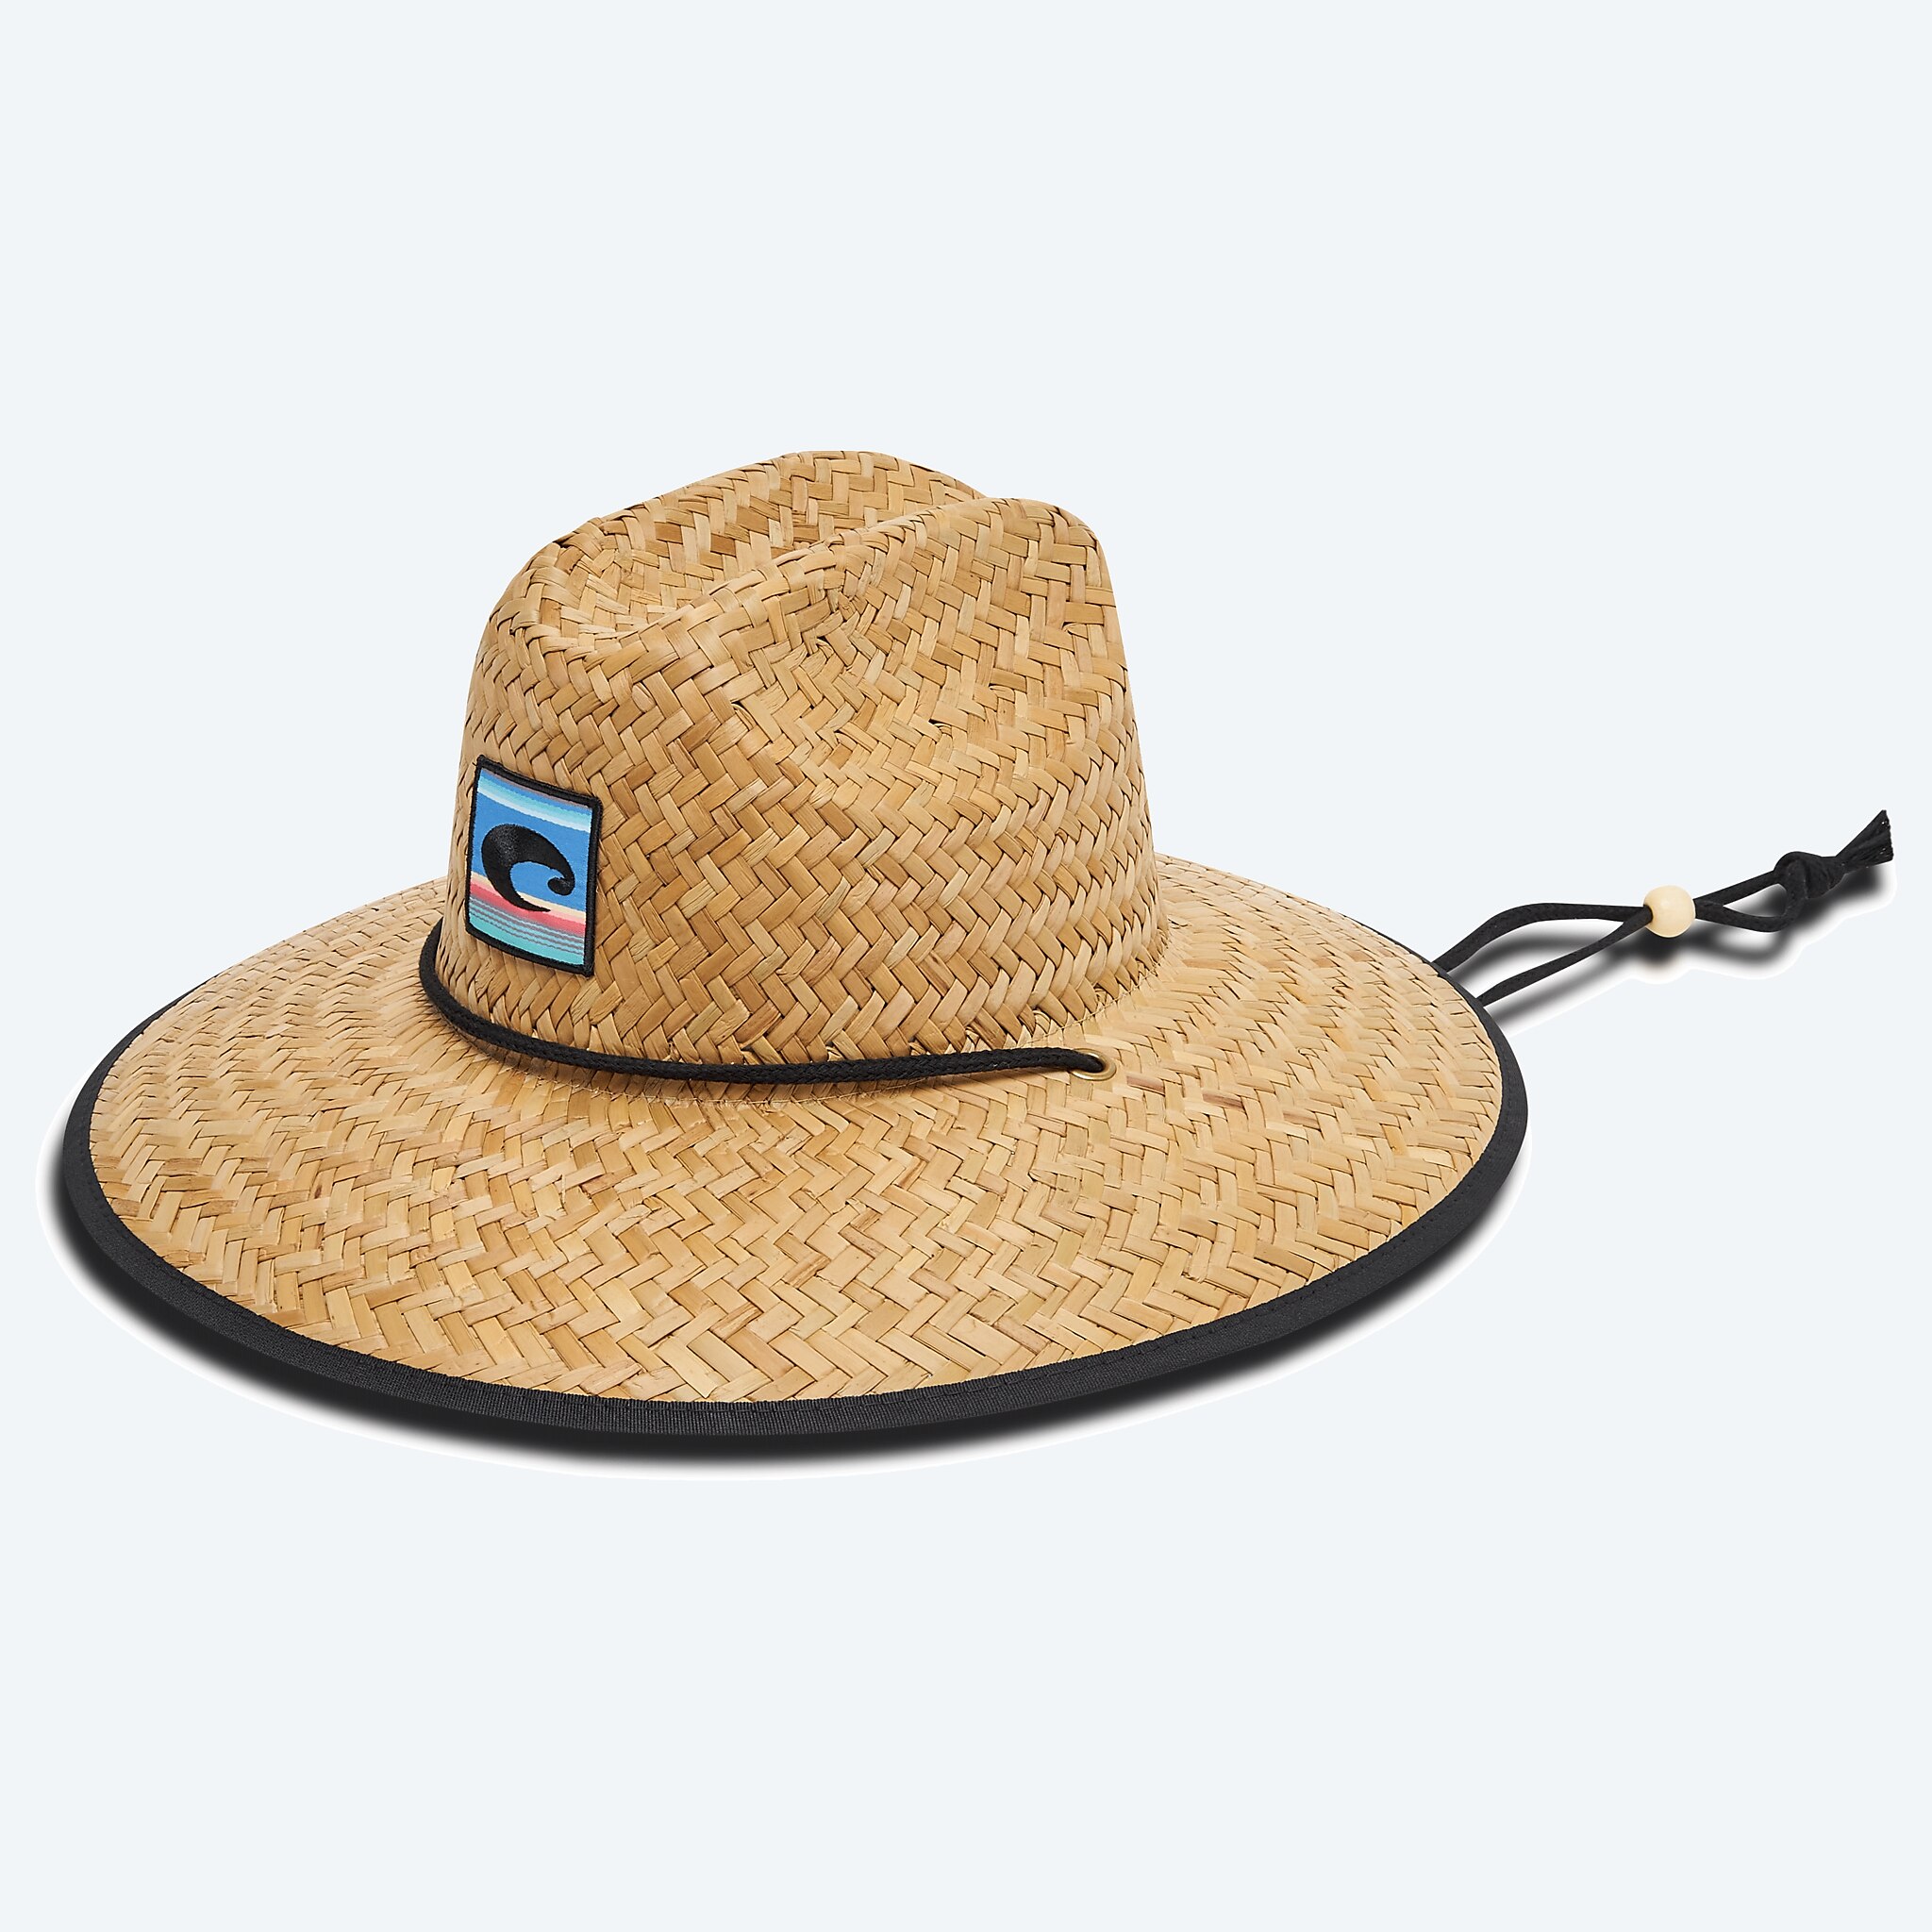 Marlin Lifeguard Straw Fishing Hat